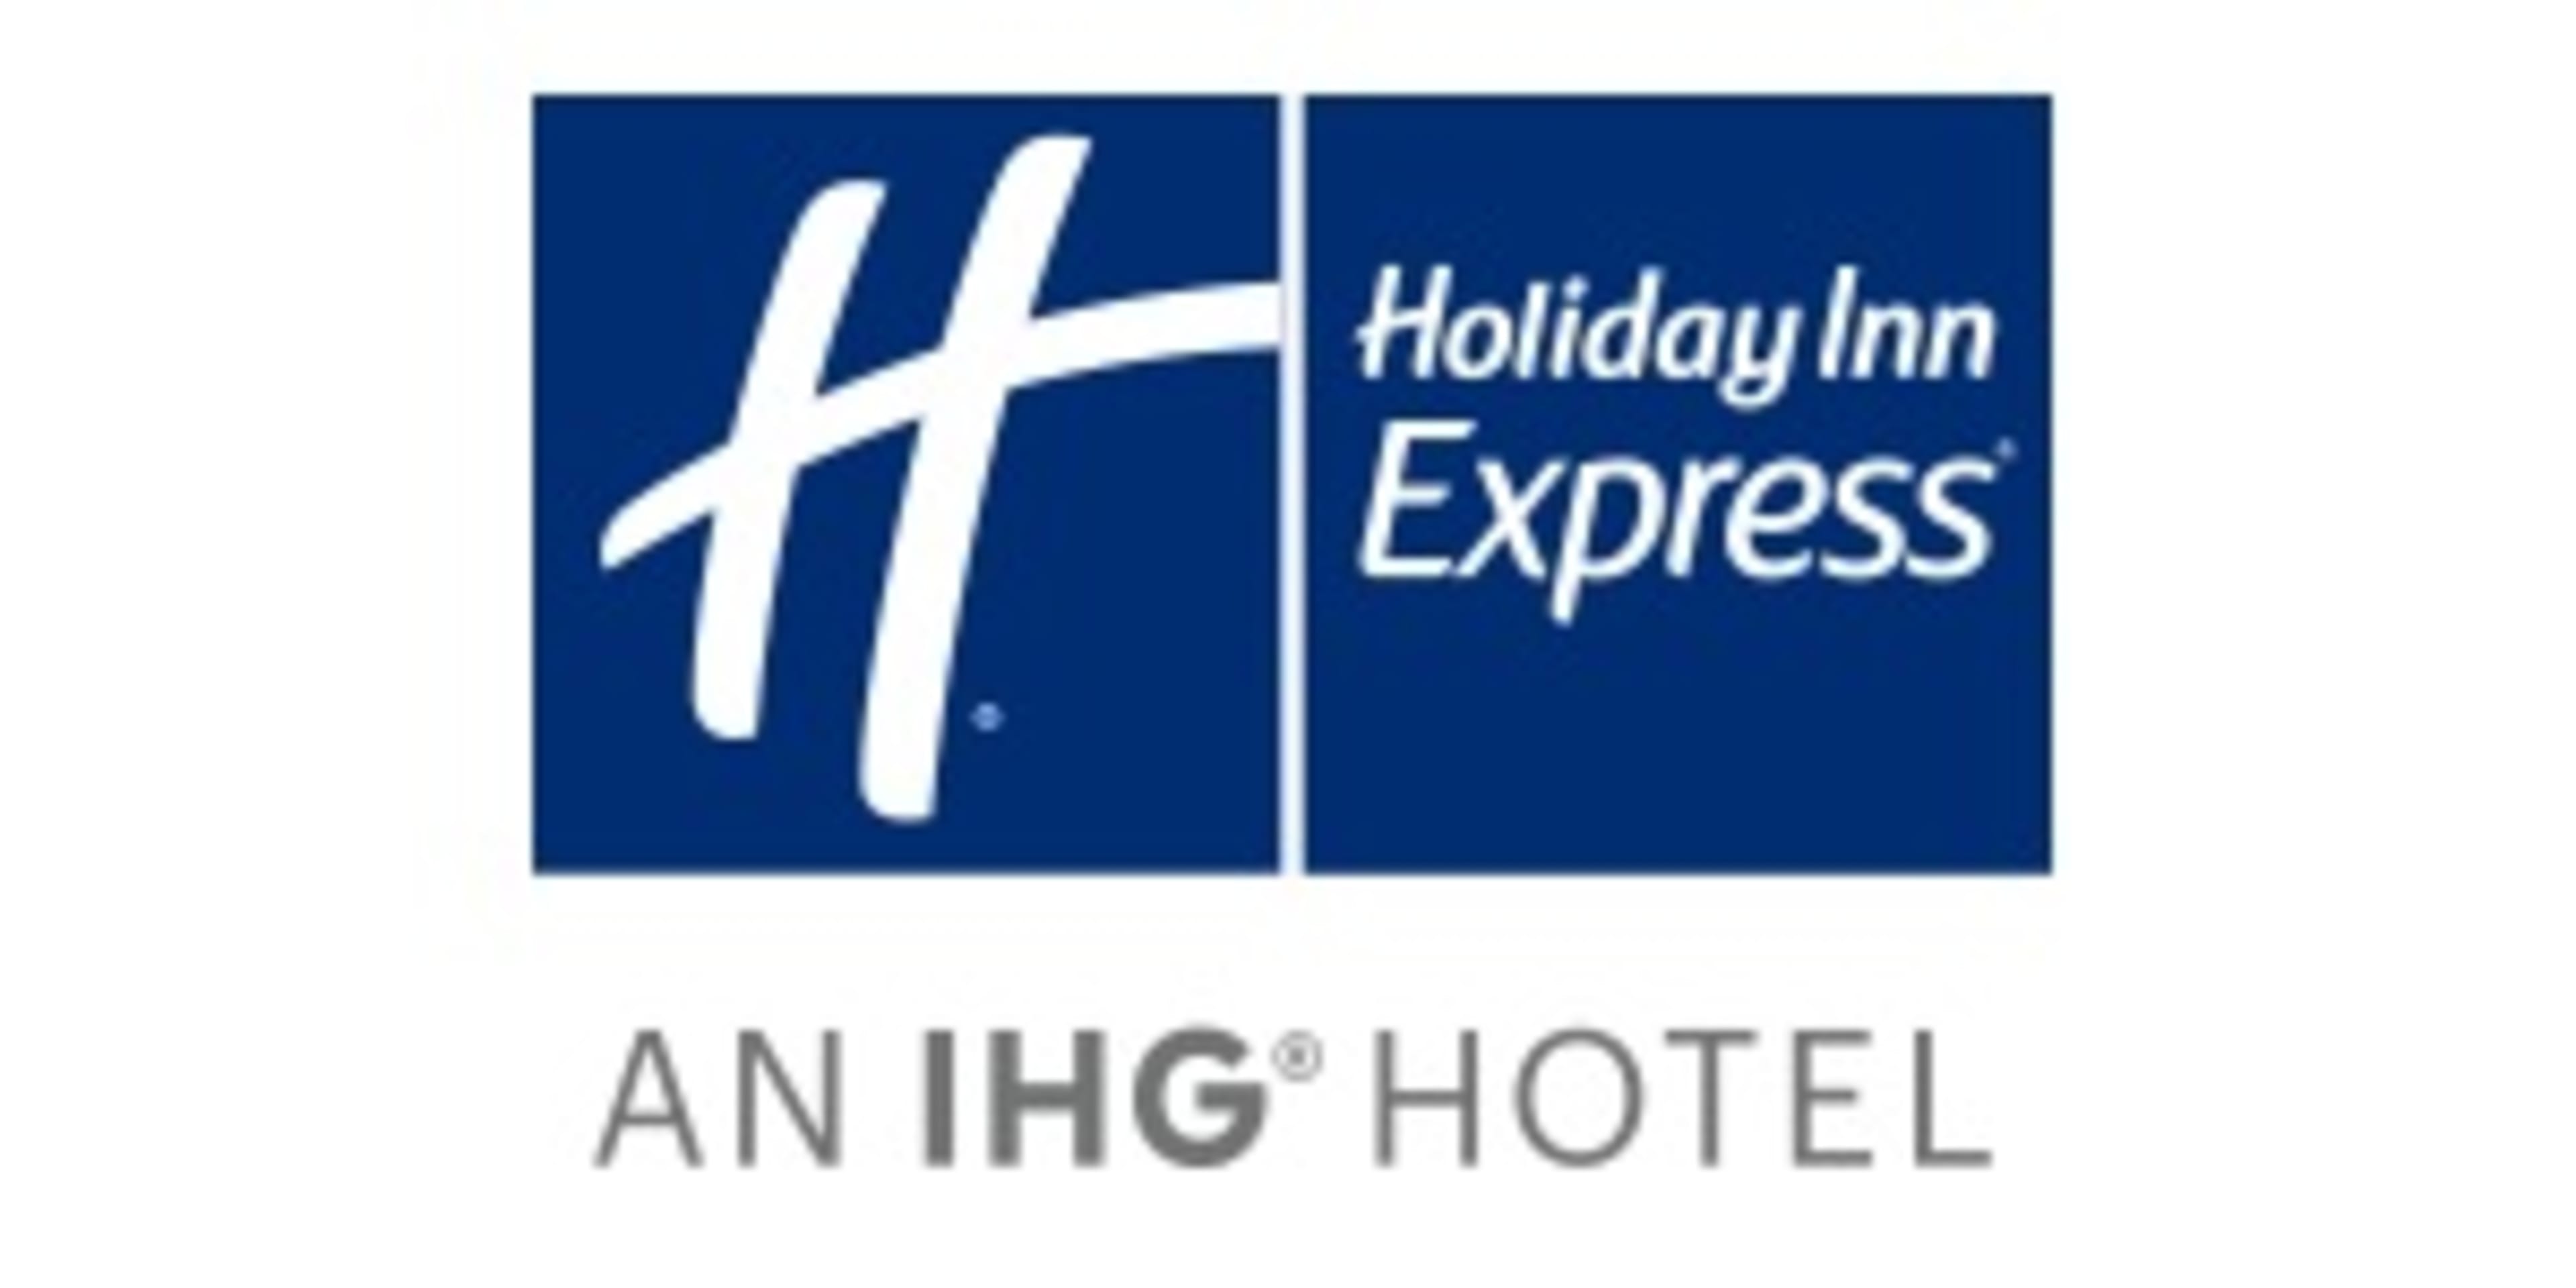 Holiday Inn Express Code